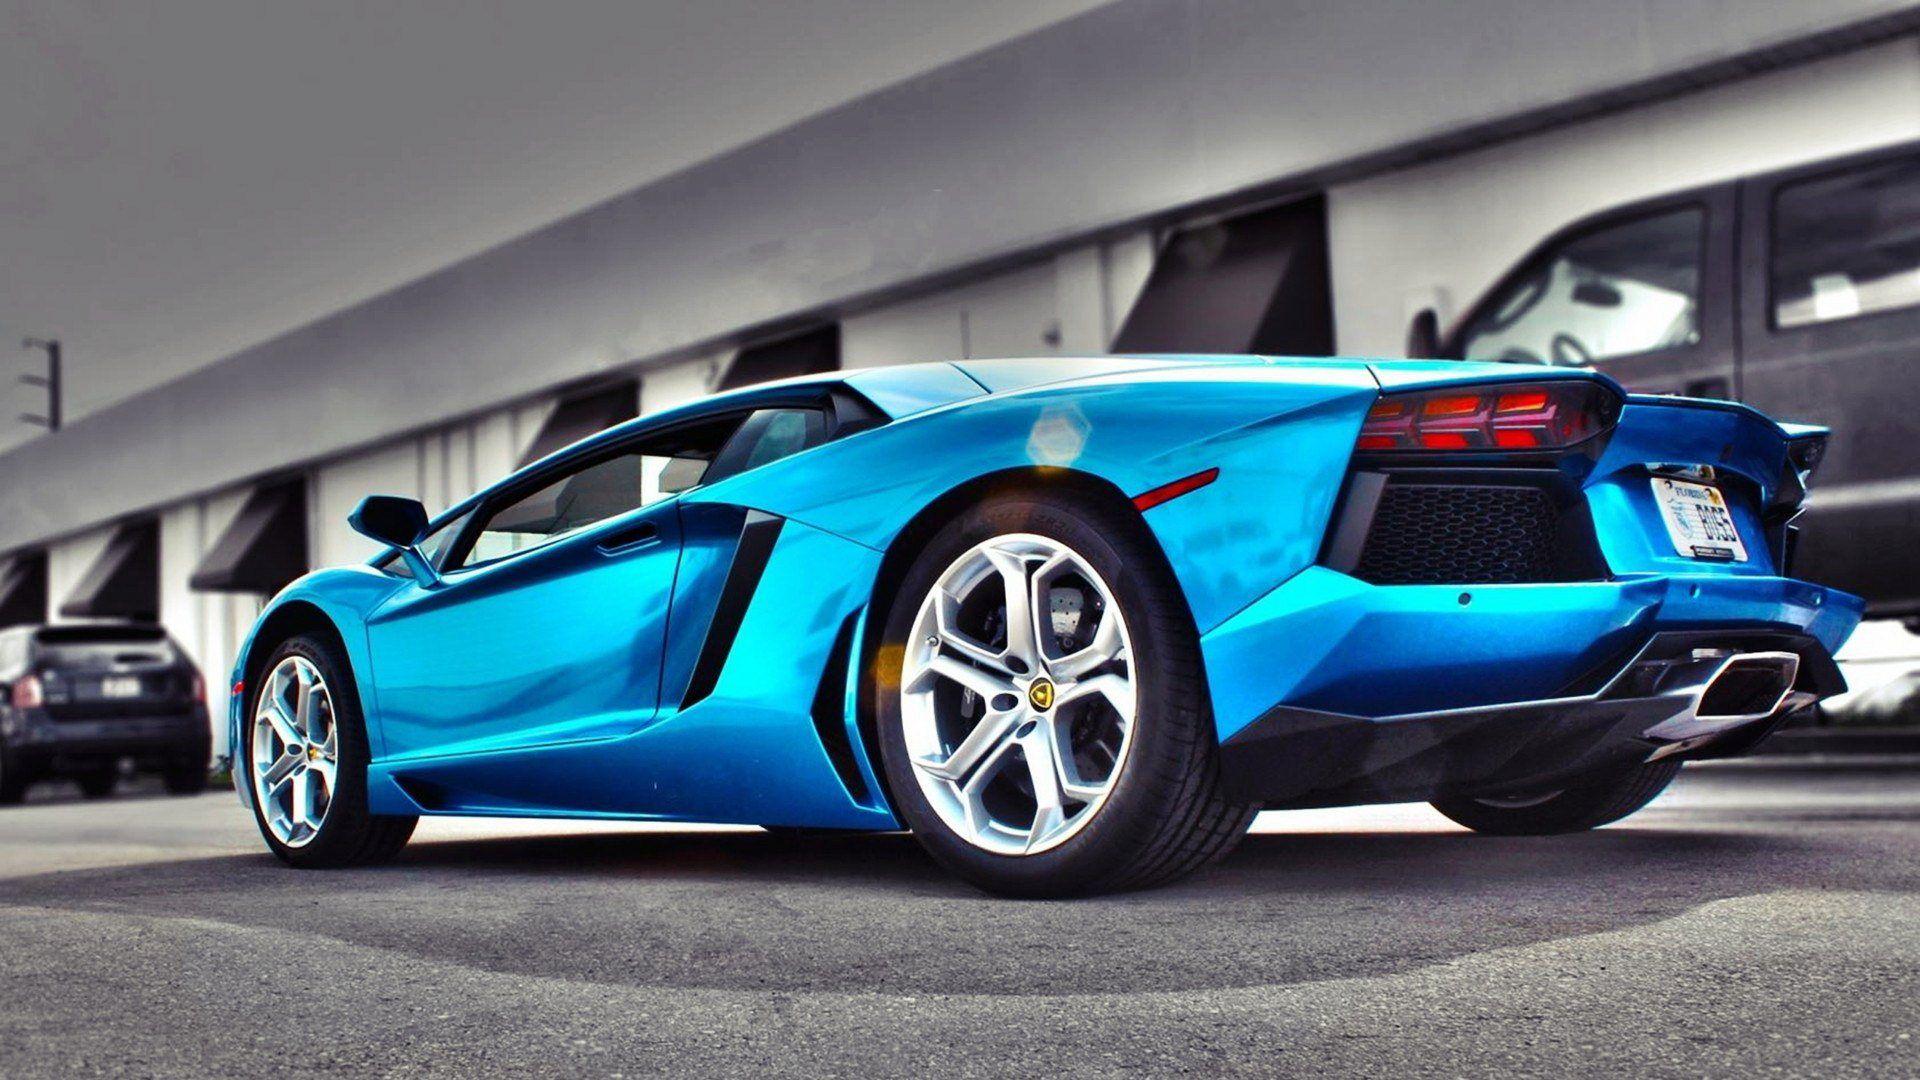 Blue Lamborghini Wallpaper Background. Vehicles Wallpaper